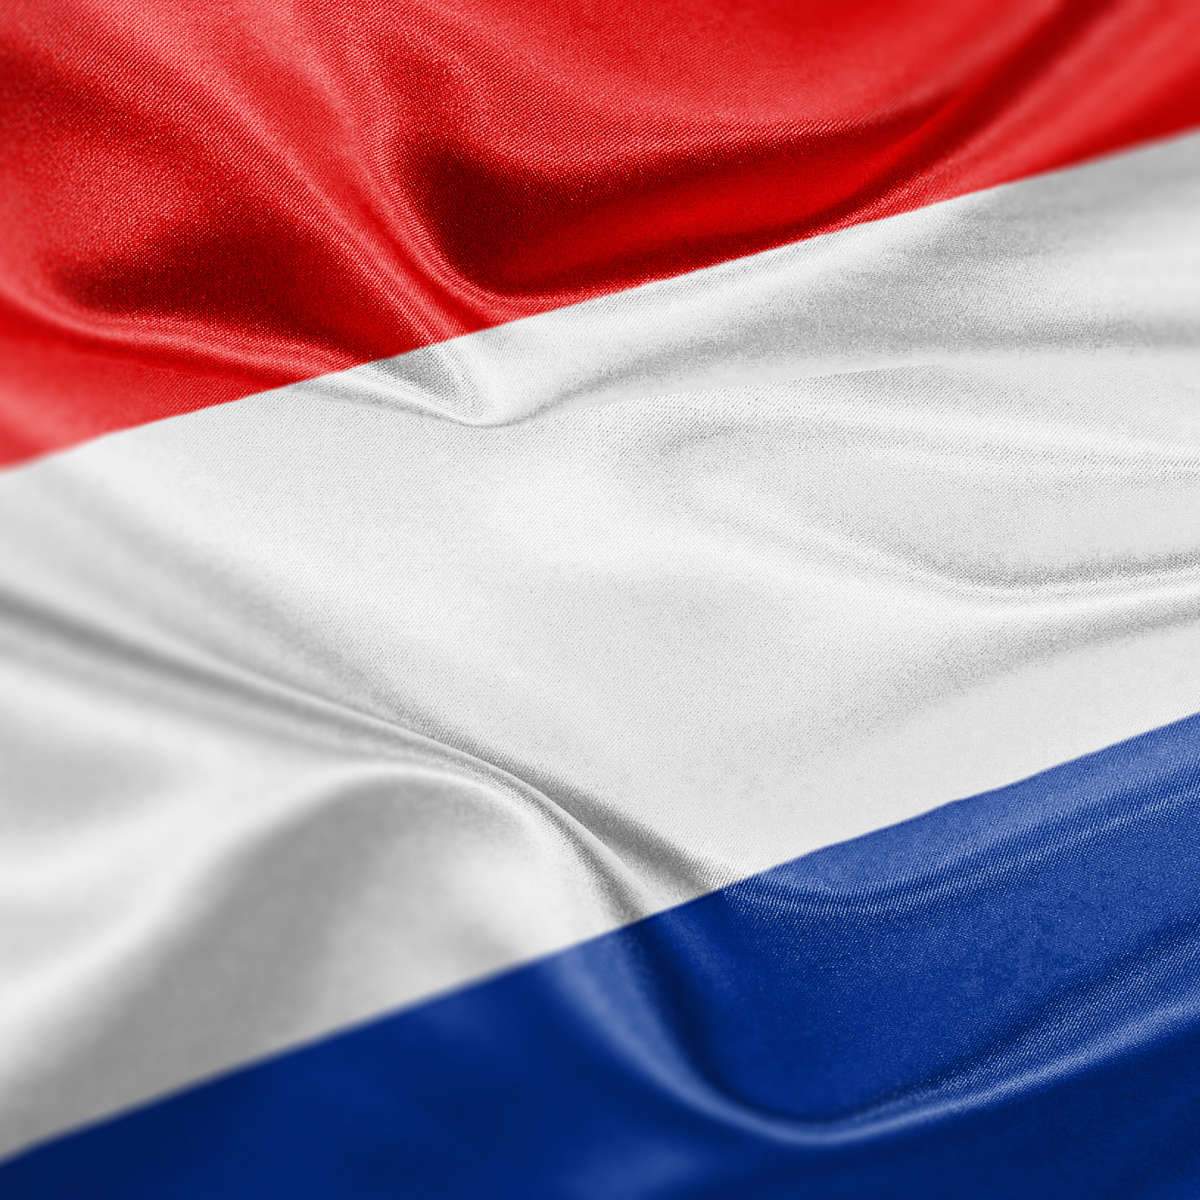 Netherlands Flags